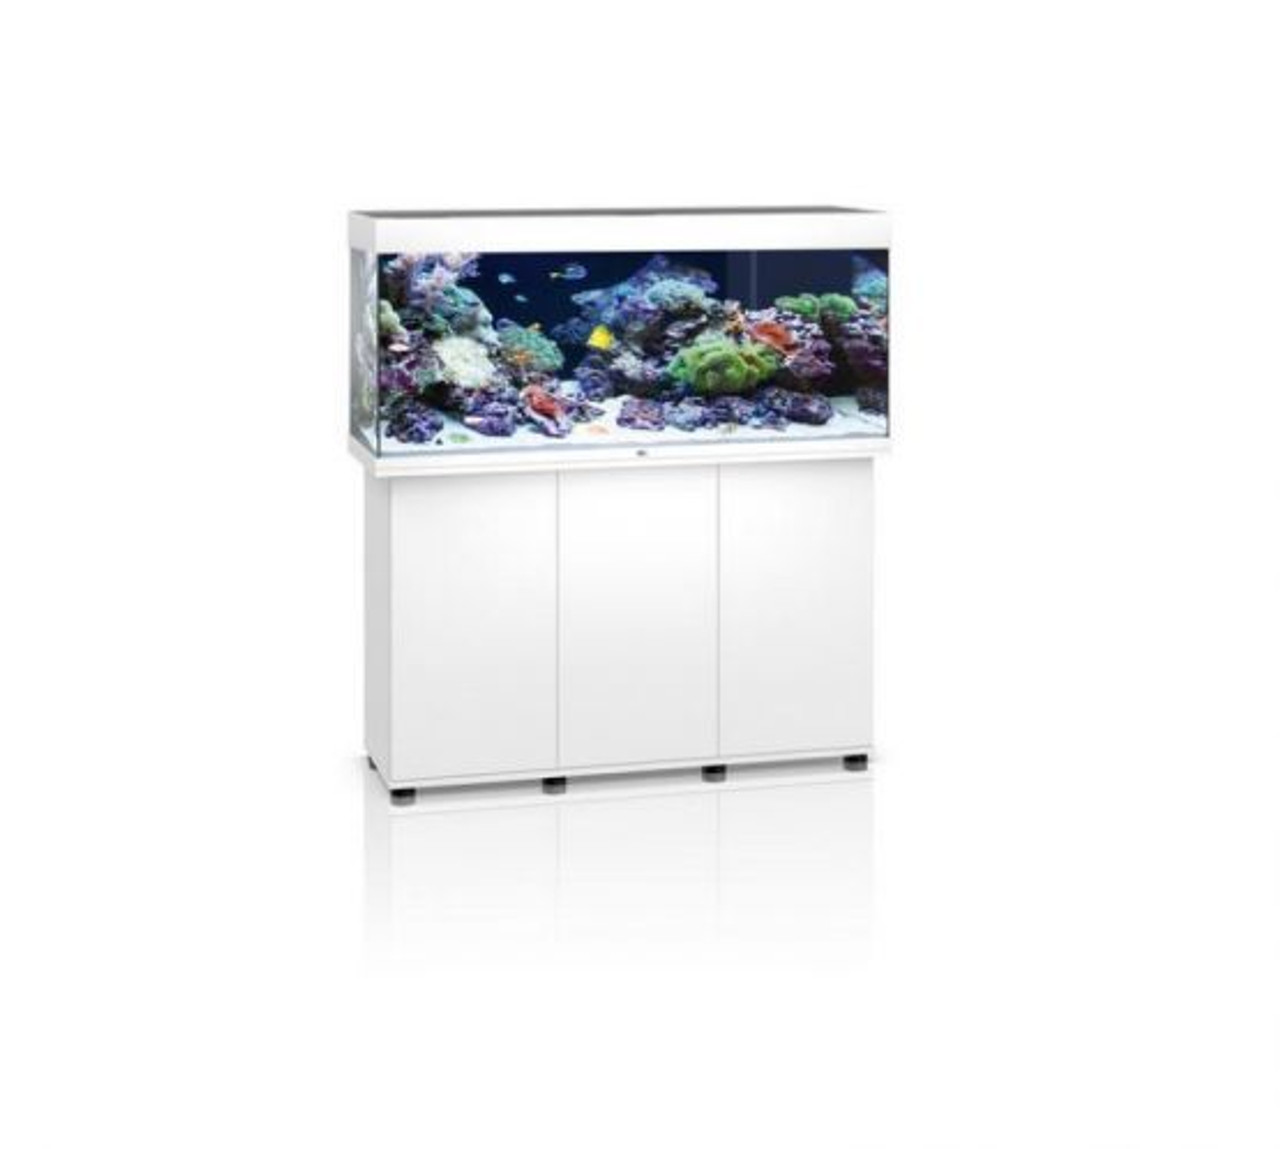 Ønske materiale Teenageår Rio 240 White | Juwel Marine Aquarium Kit | World of Water